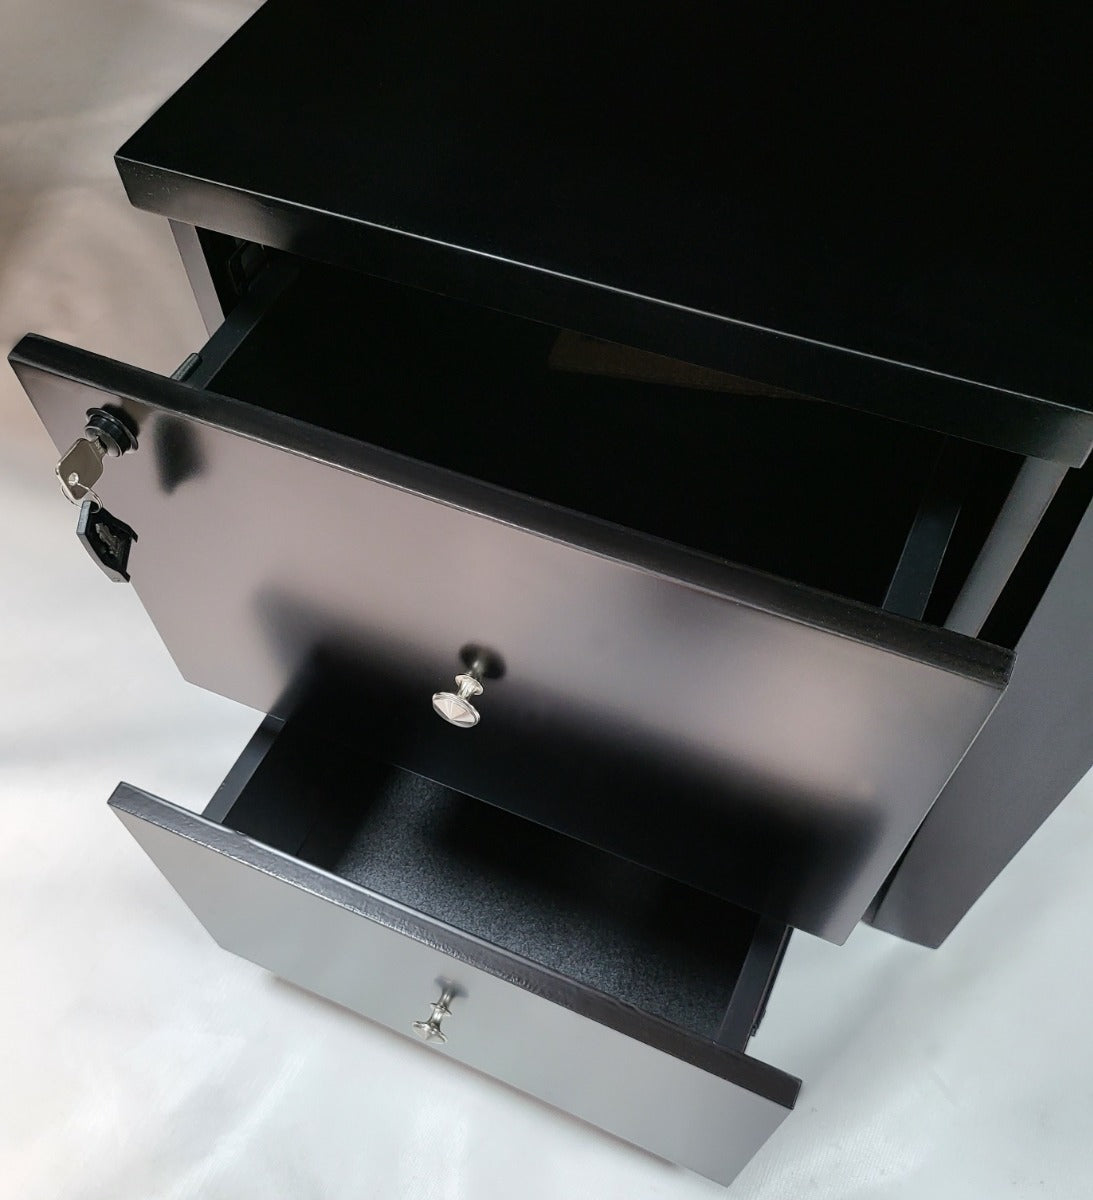 Prosparae Modern Black Executive Desk with Return & Pedestal - T1381-1.8